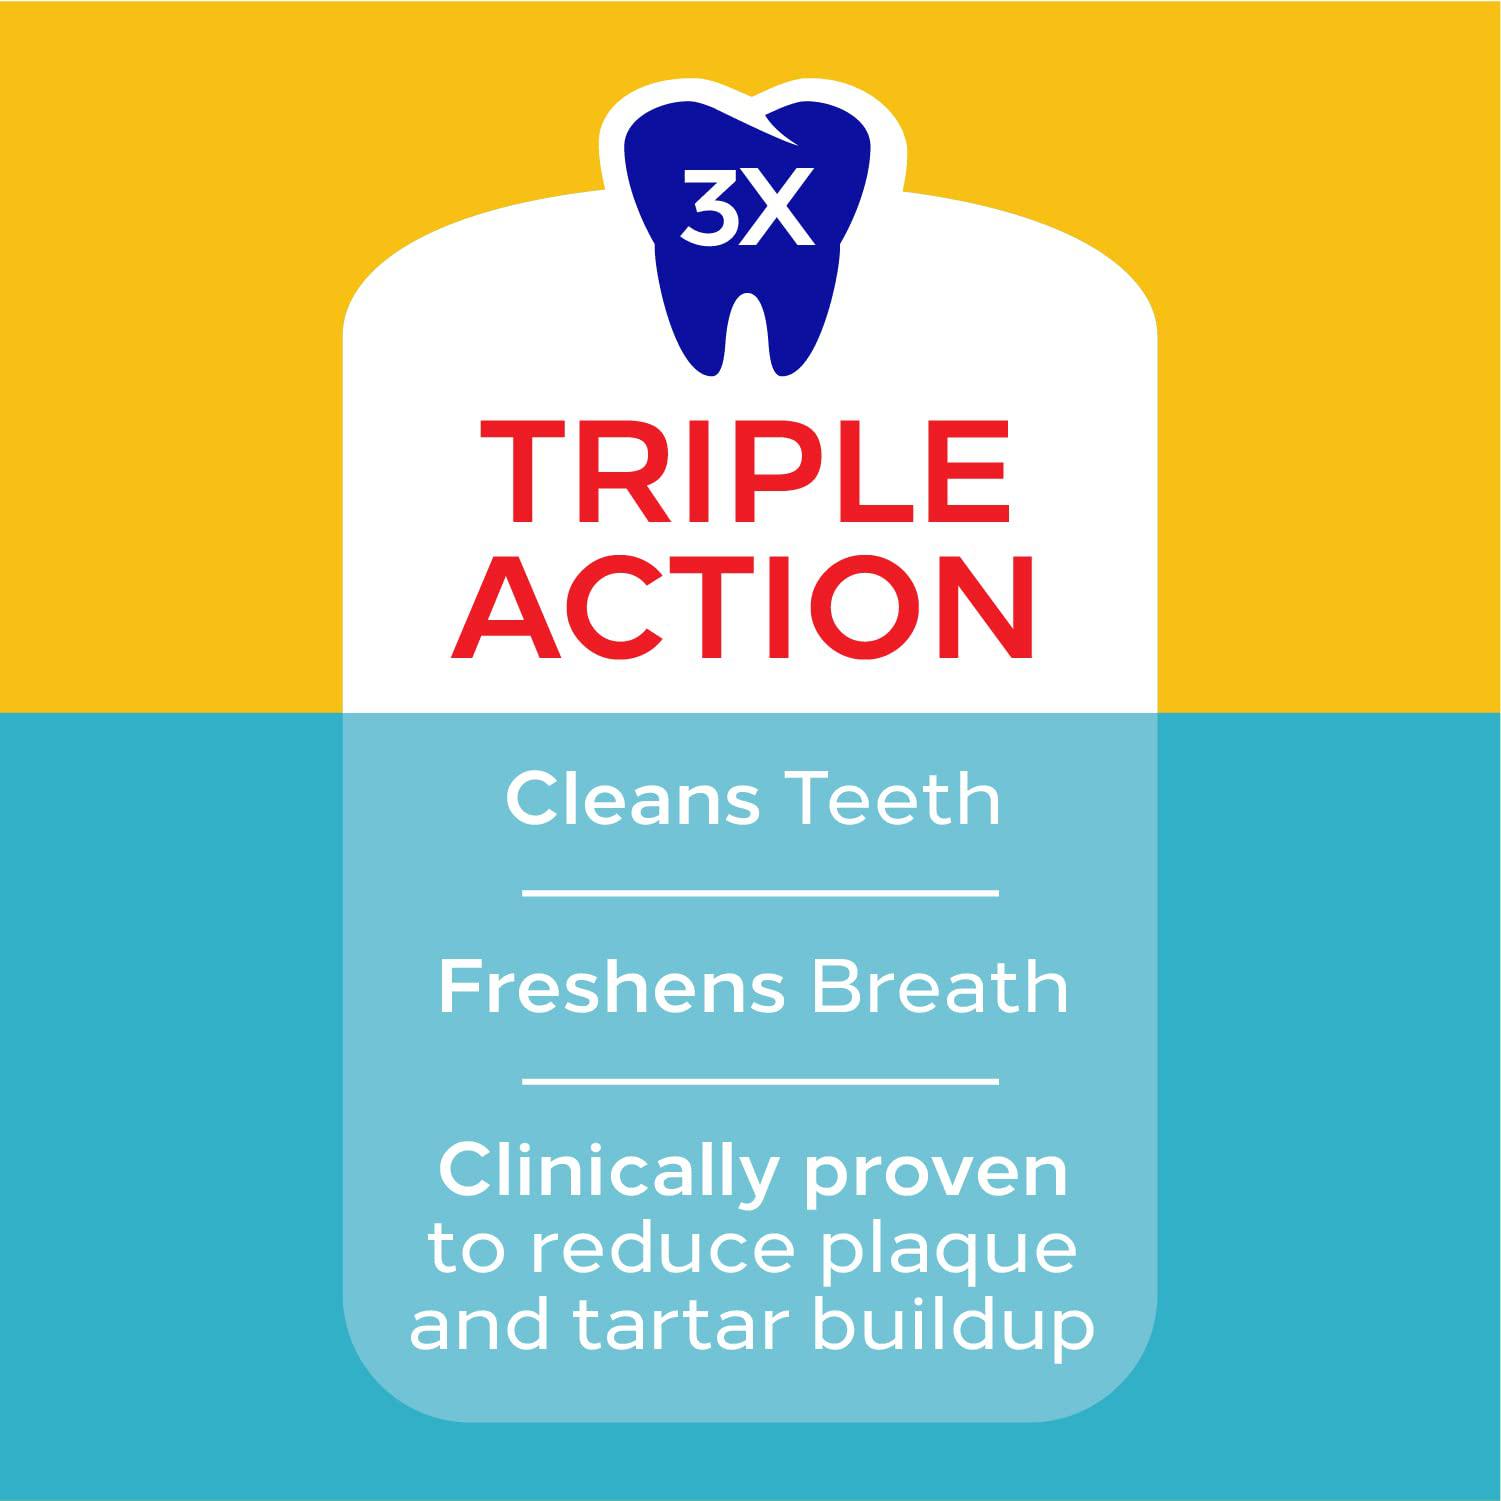 pedigree dentastix small/medium dog dental treats original flavor dental bones, 1.57 lb. value pack (45 treats)